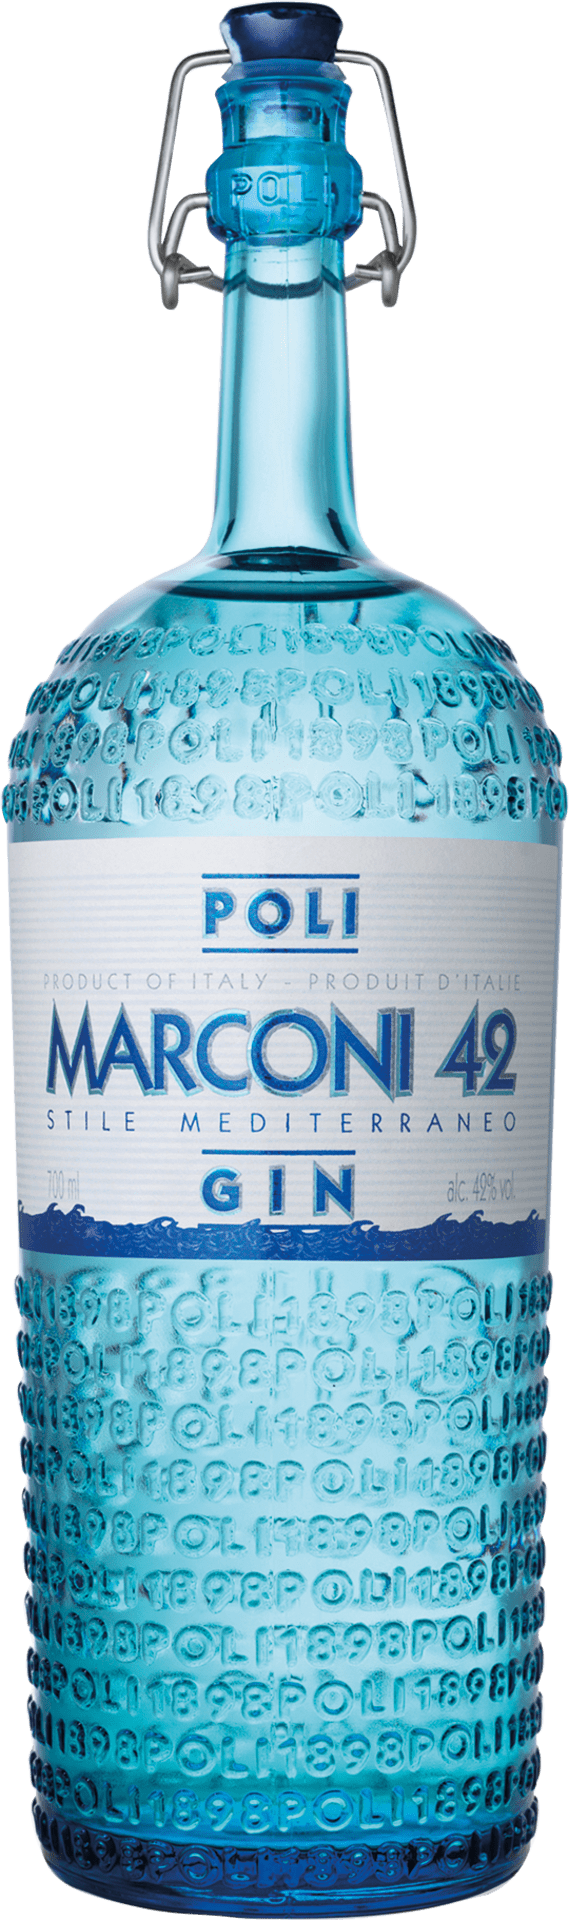 Marconi 42 Gin